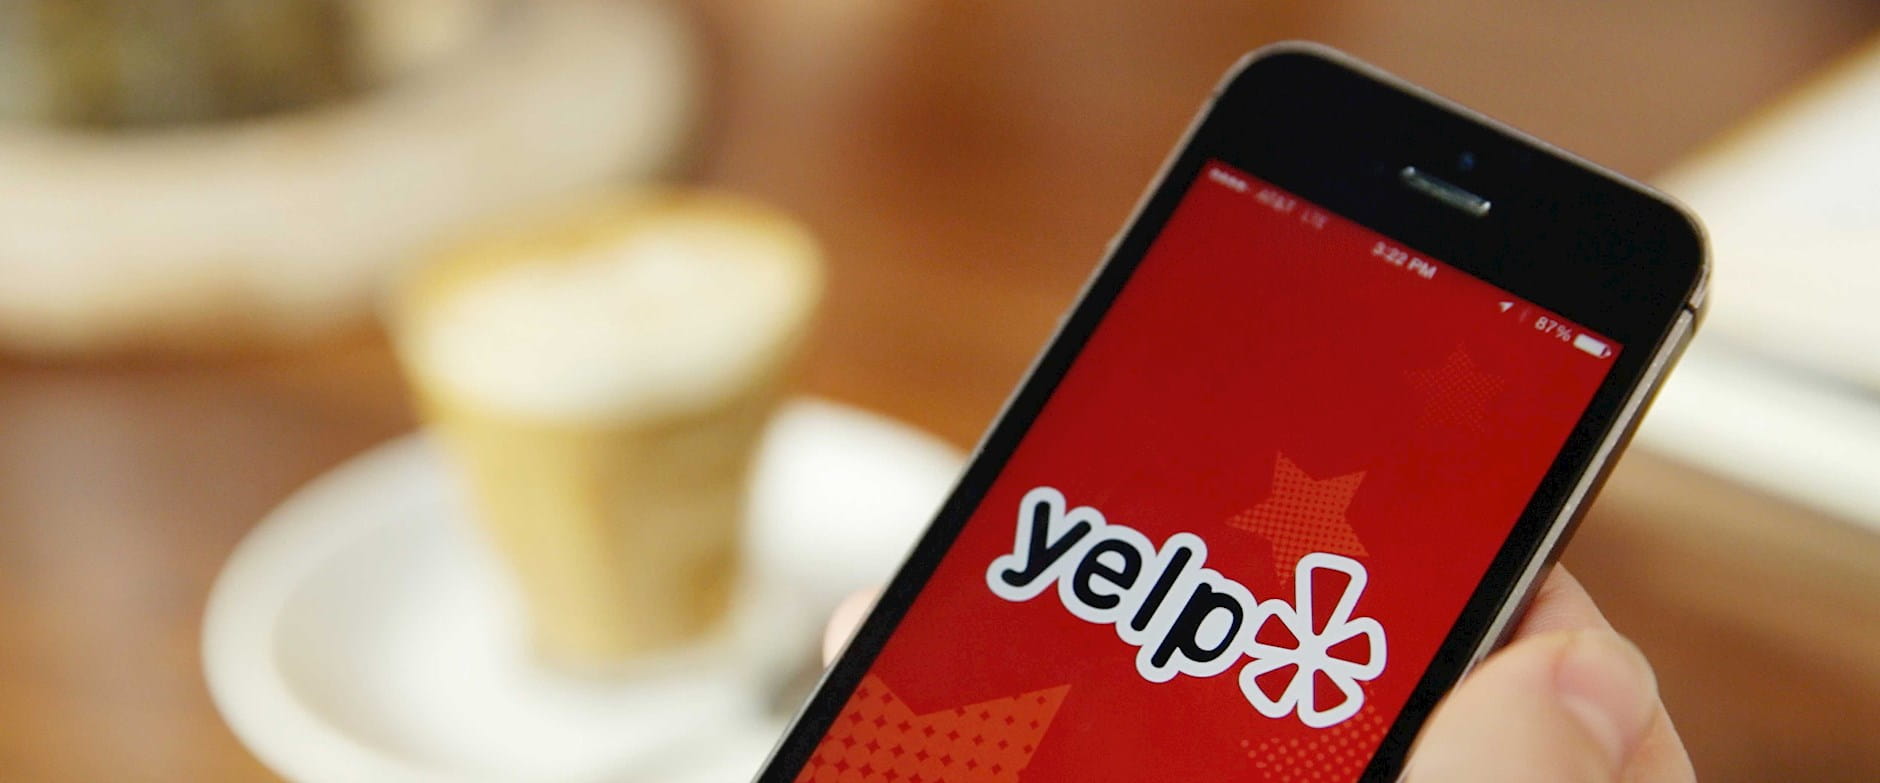 Smartphone with Yelp app open